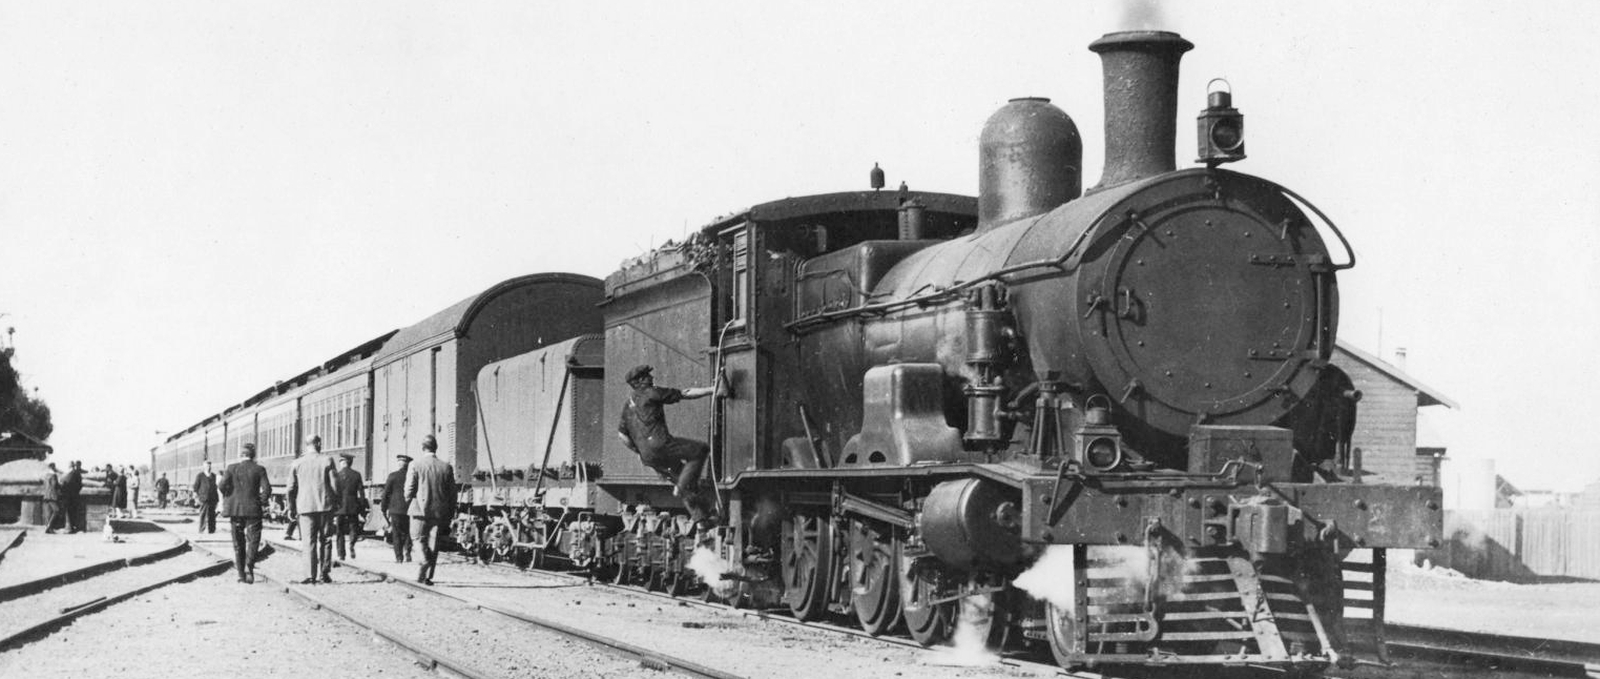 G20 circa 1925 on the Trans-Australian Express at Tarcoola